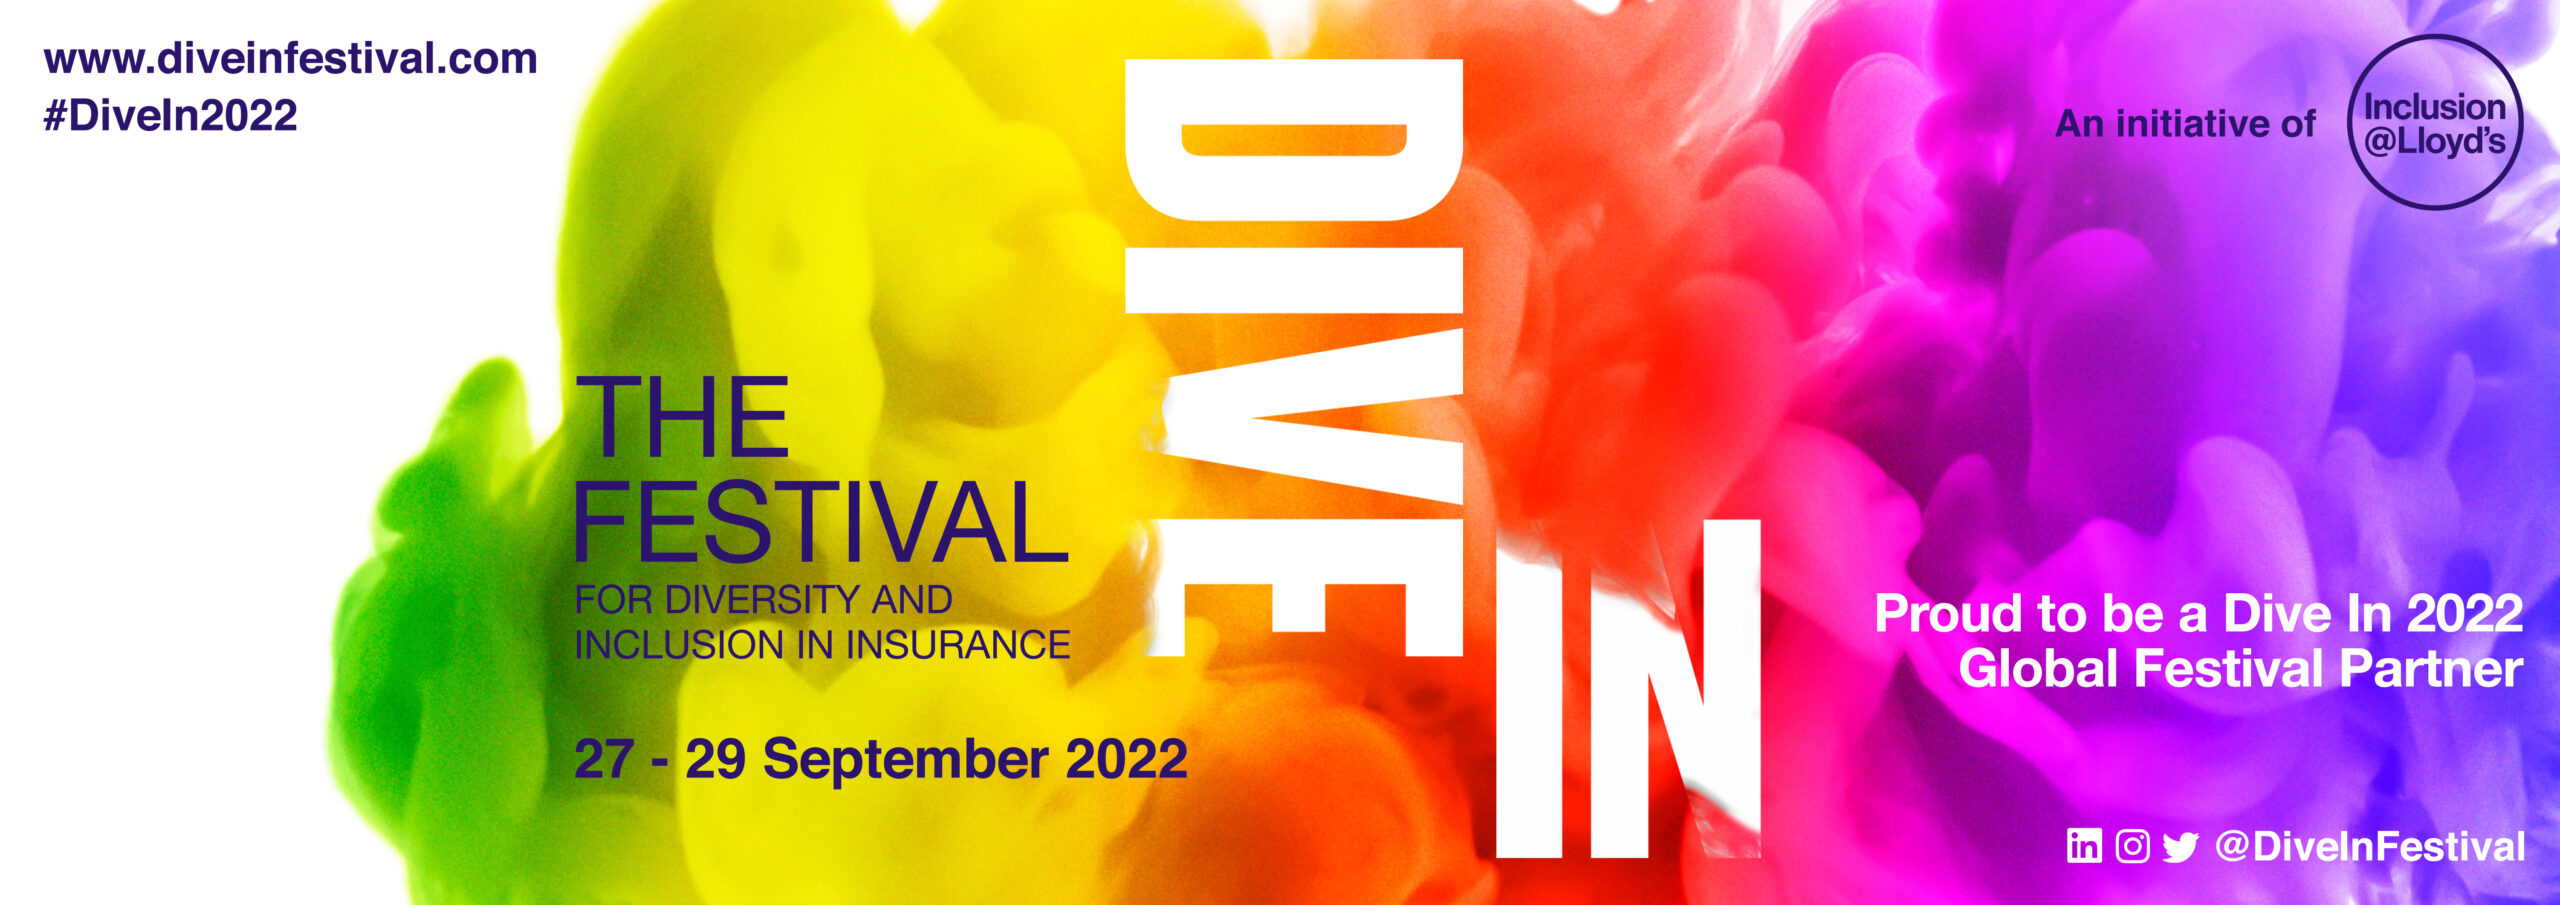 Dive In festival banner